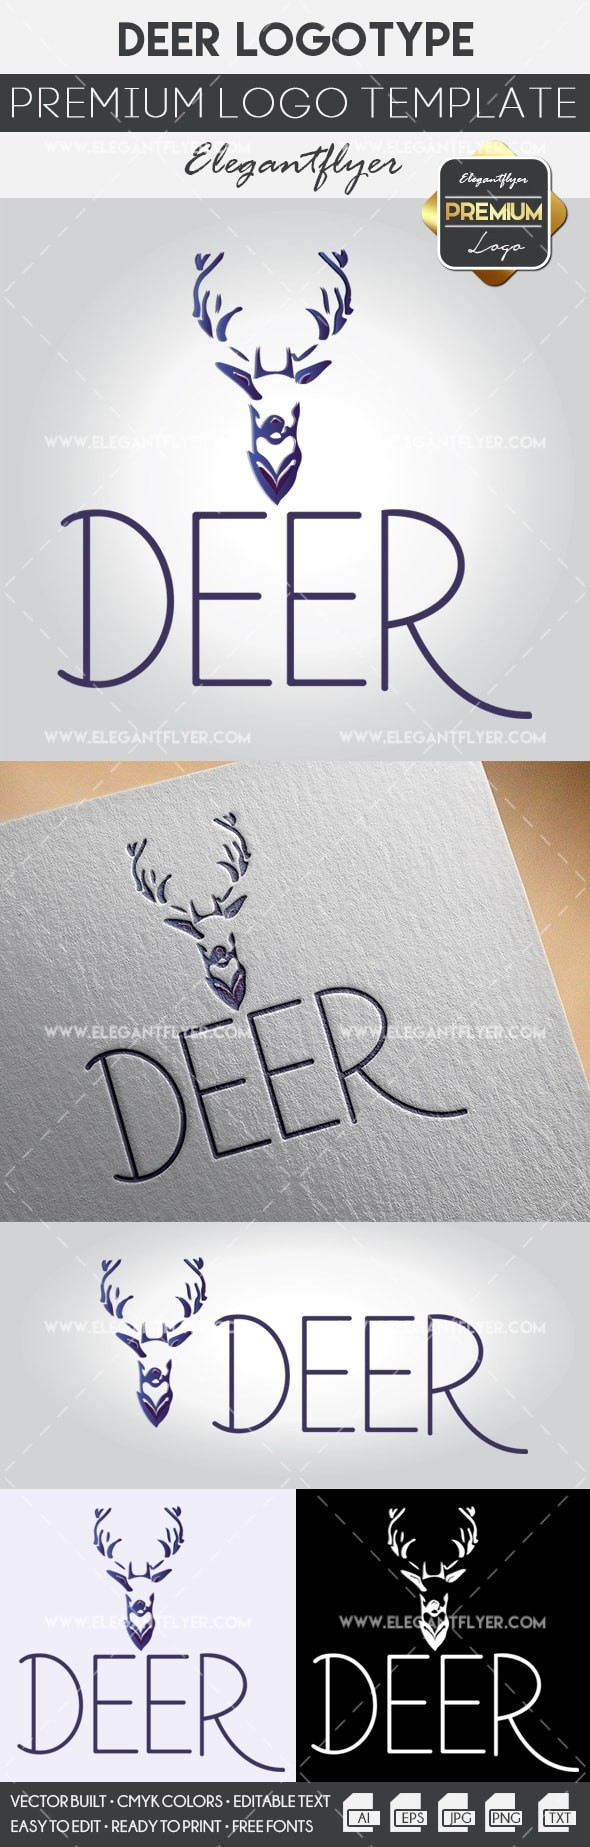 Deer by ElegantFlyer